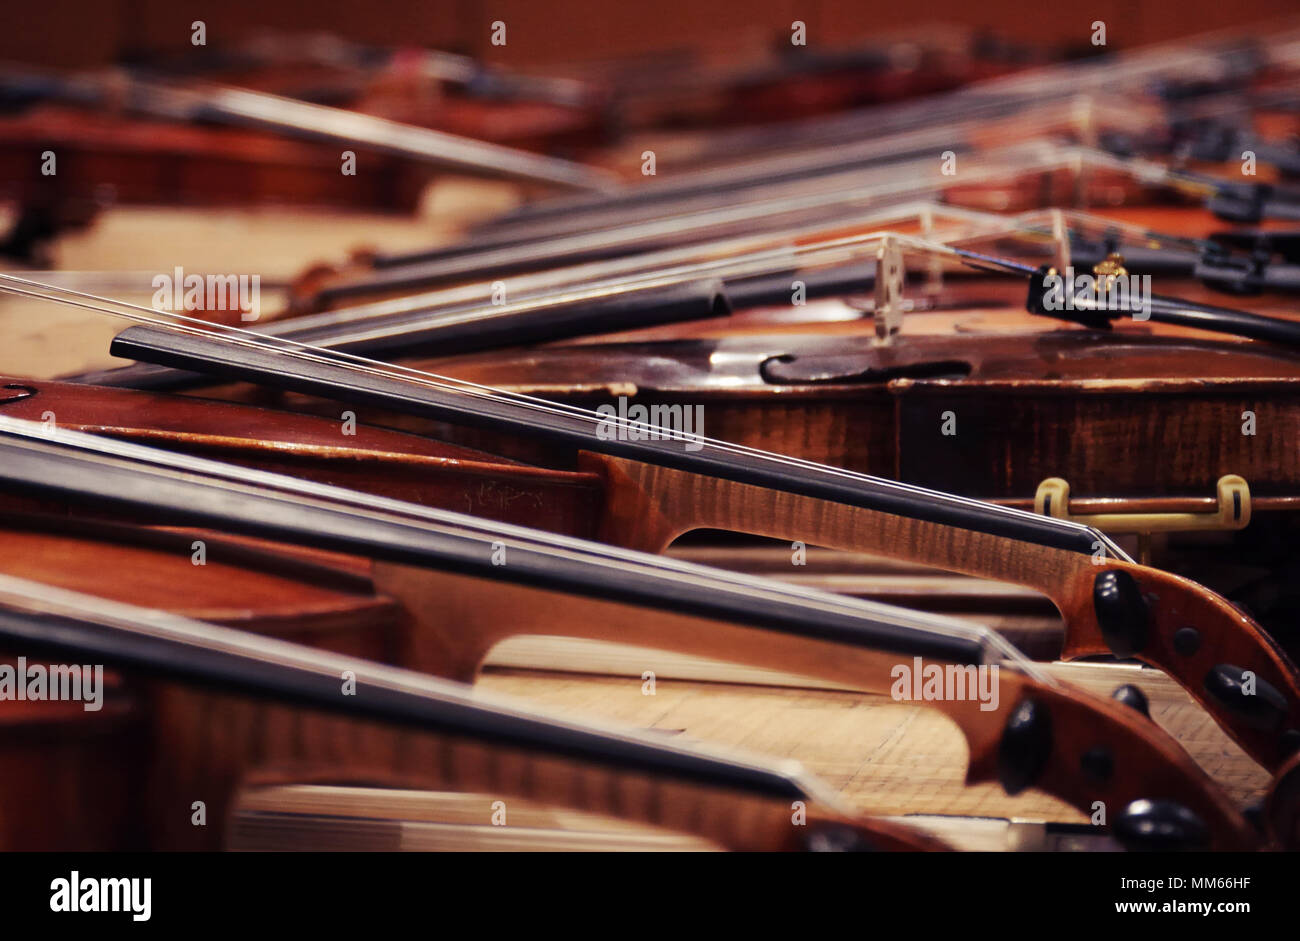 Violins Violin Geige Geigen Strings Orchestra Concert Instrument Stock Photo